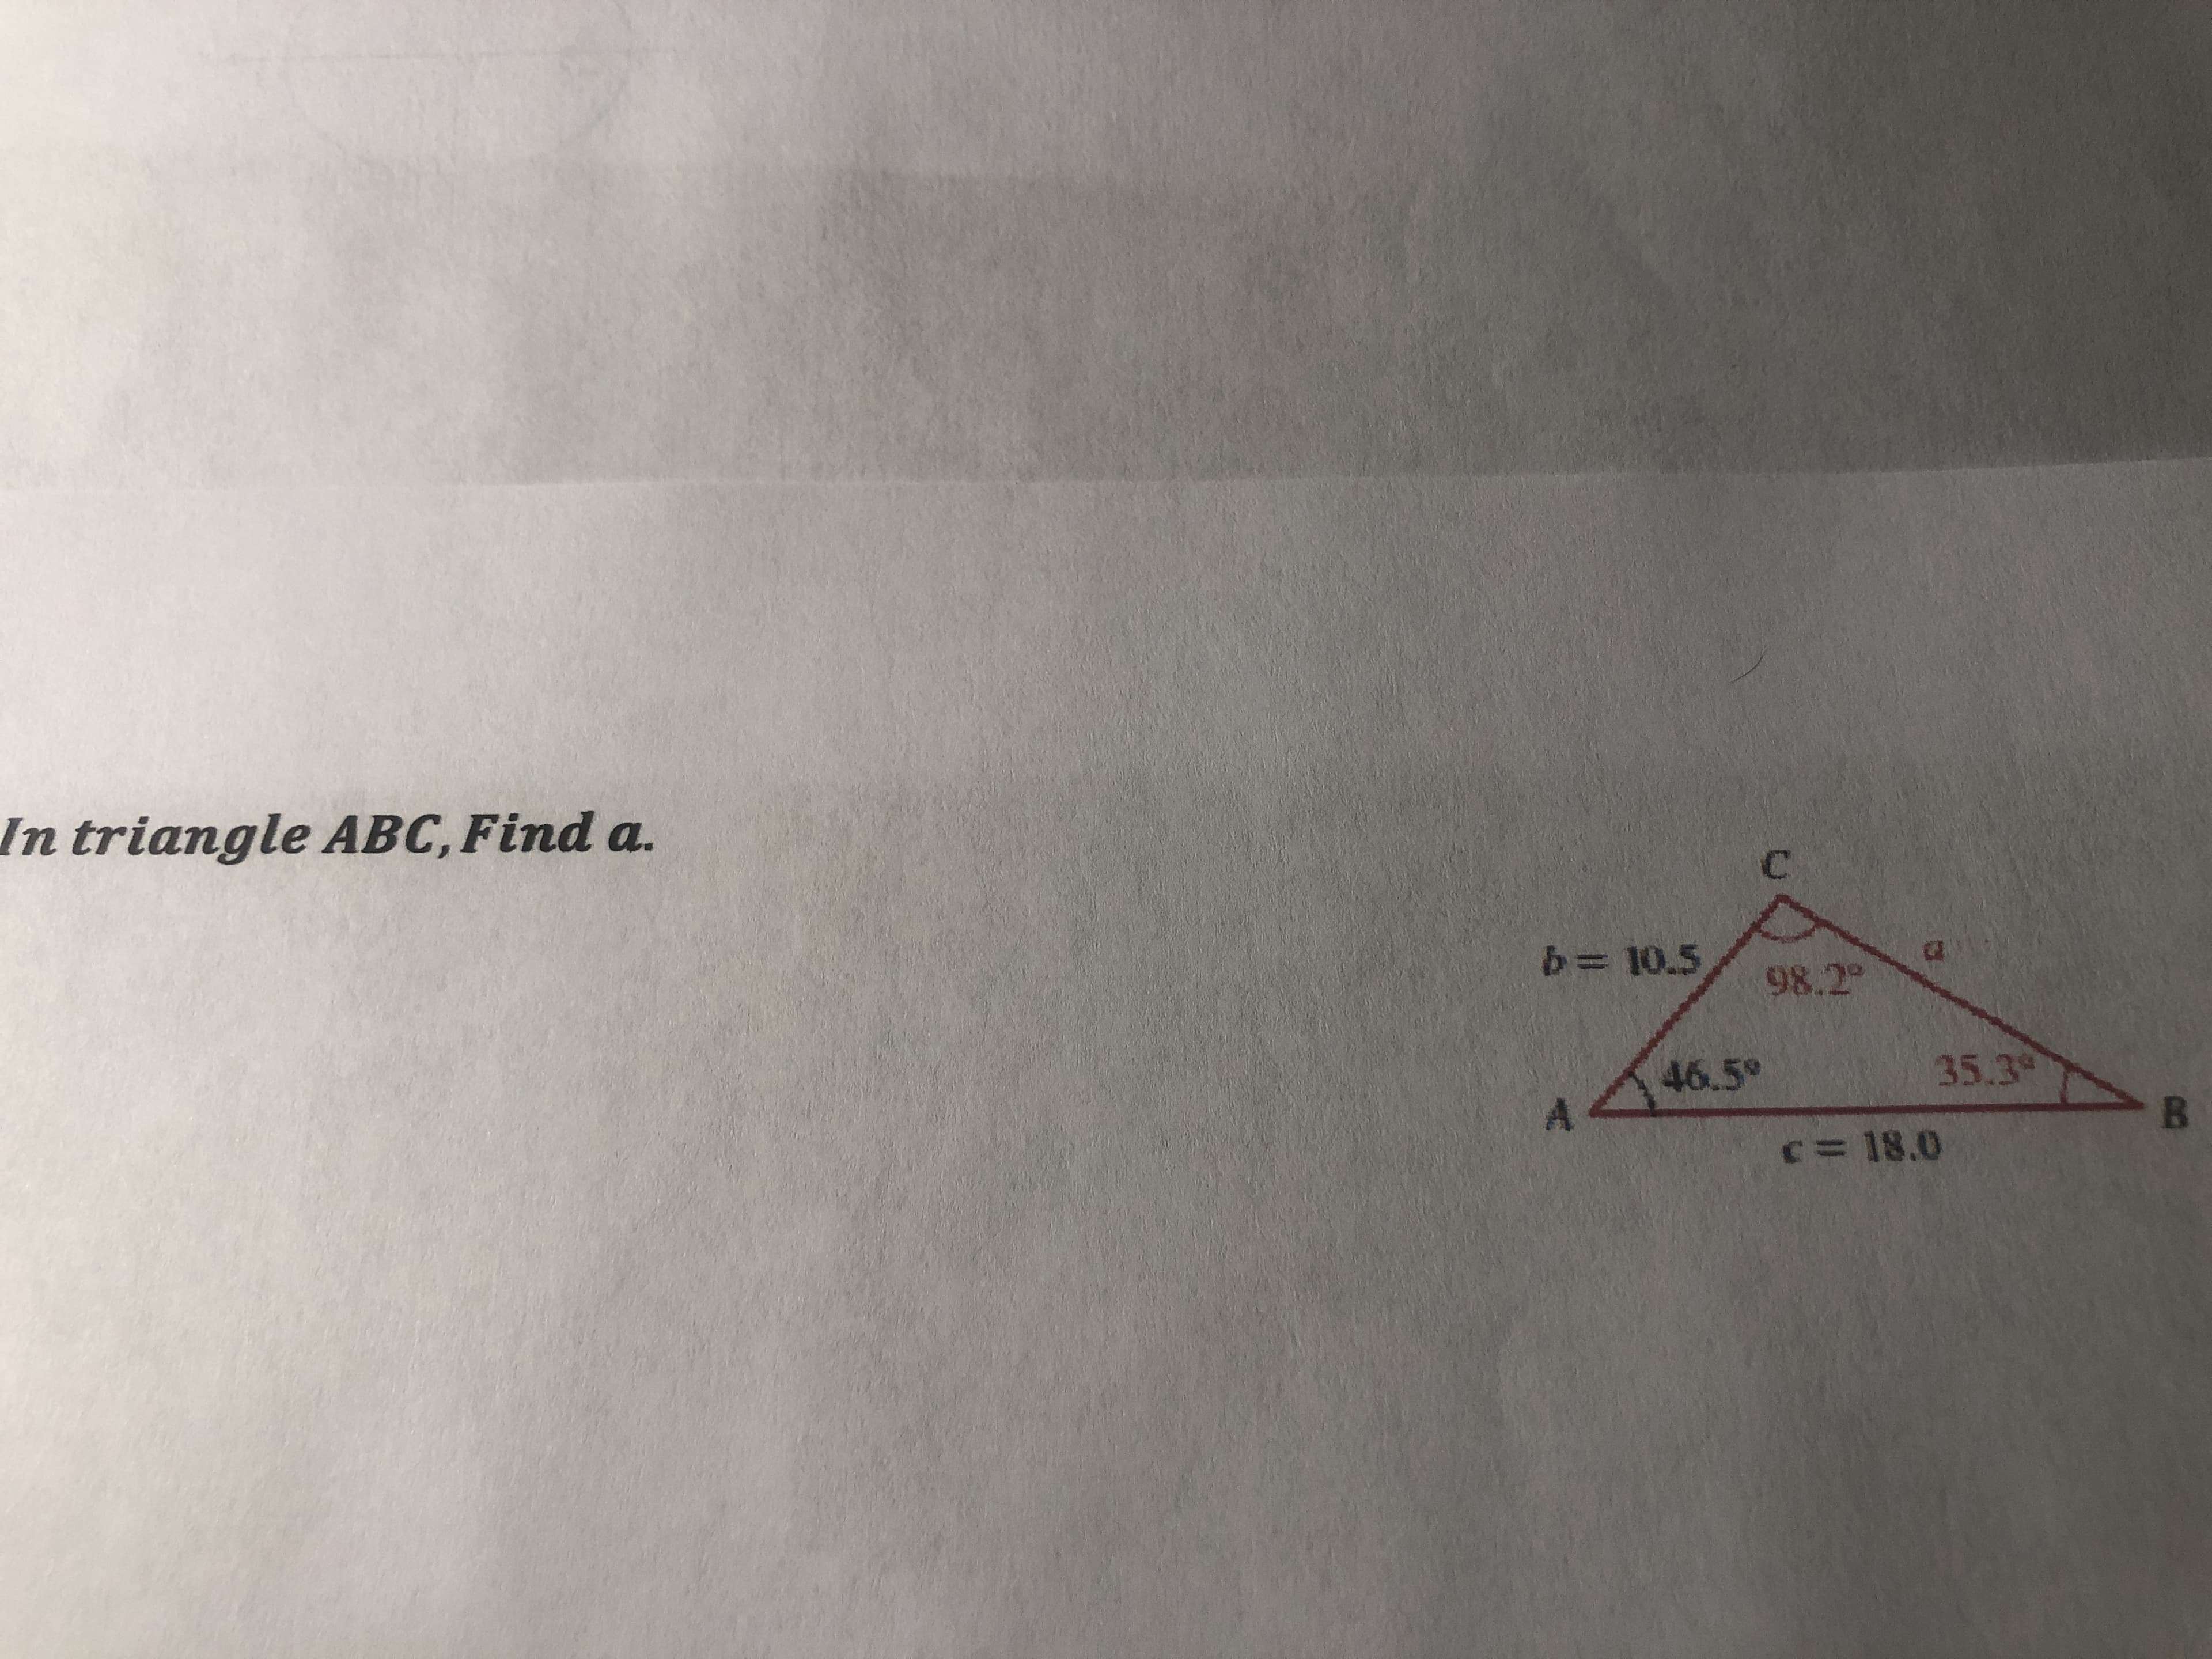 In triangle ABC, Find a.
C.
b= 10.5
98.2
46.5°
35.39
C=18.0
